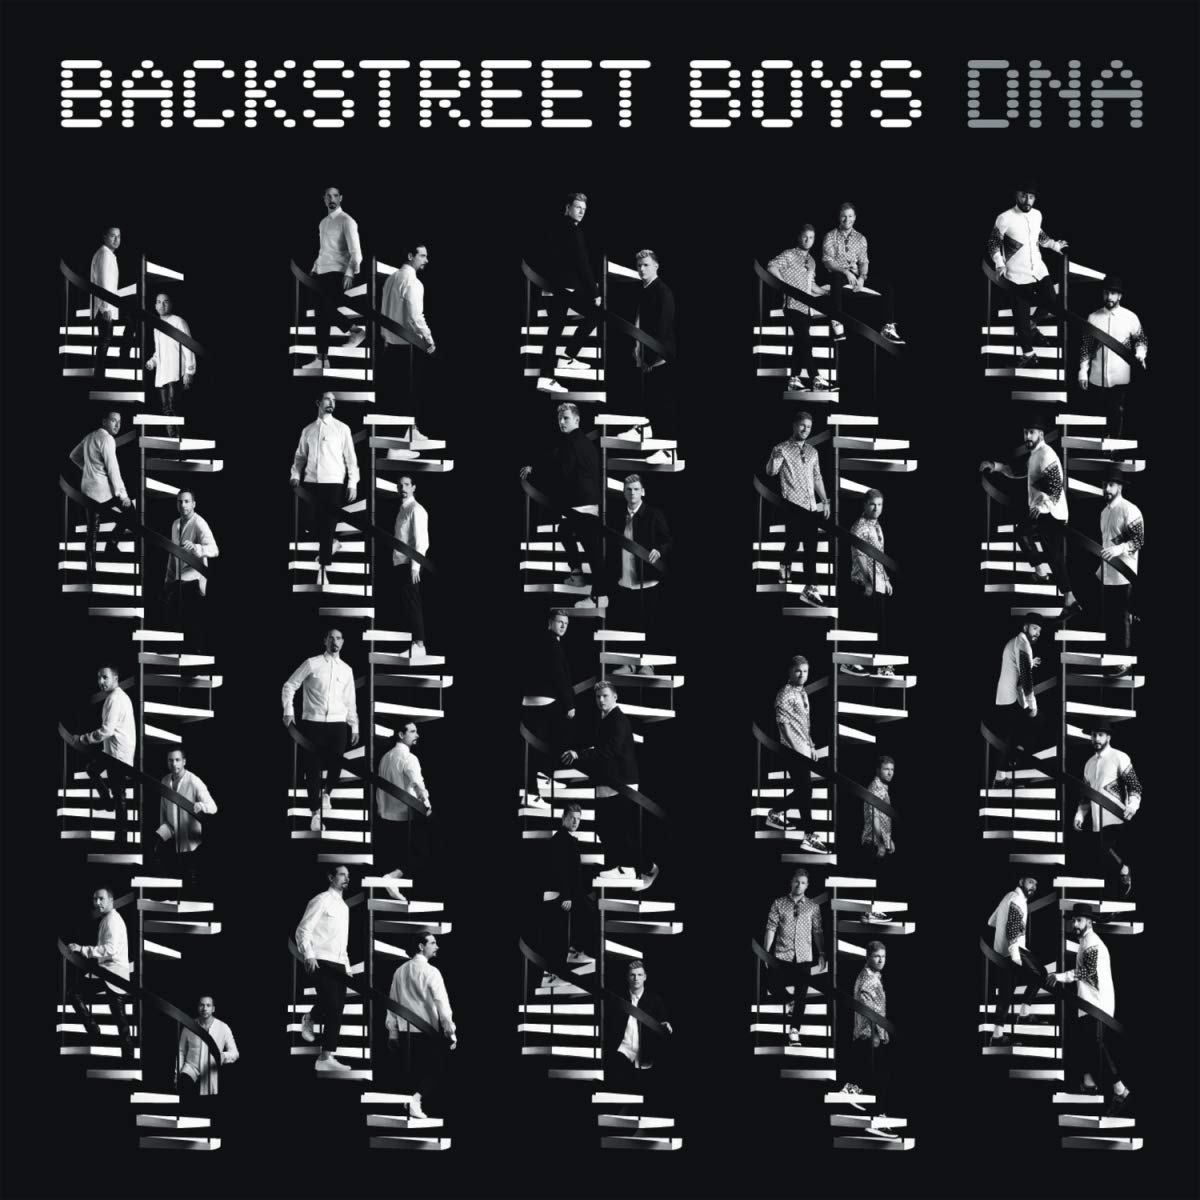 Dna | Backstreet Boys  image0